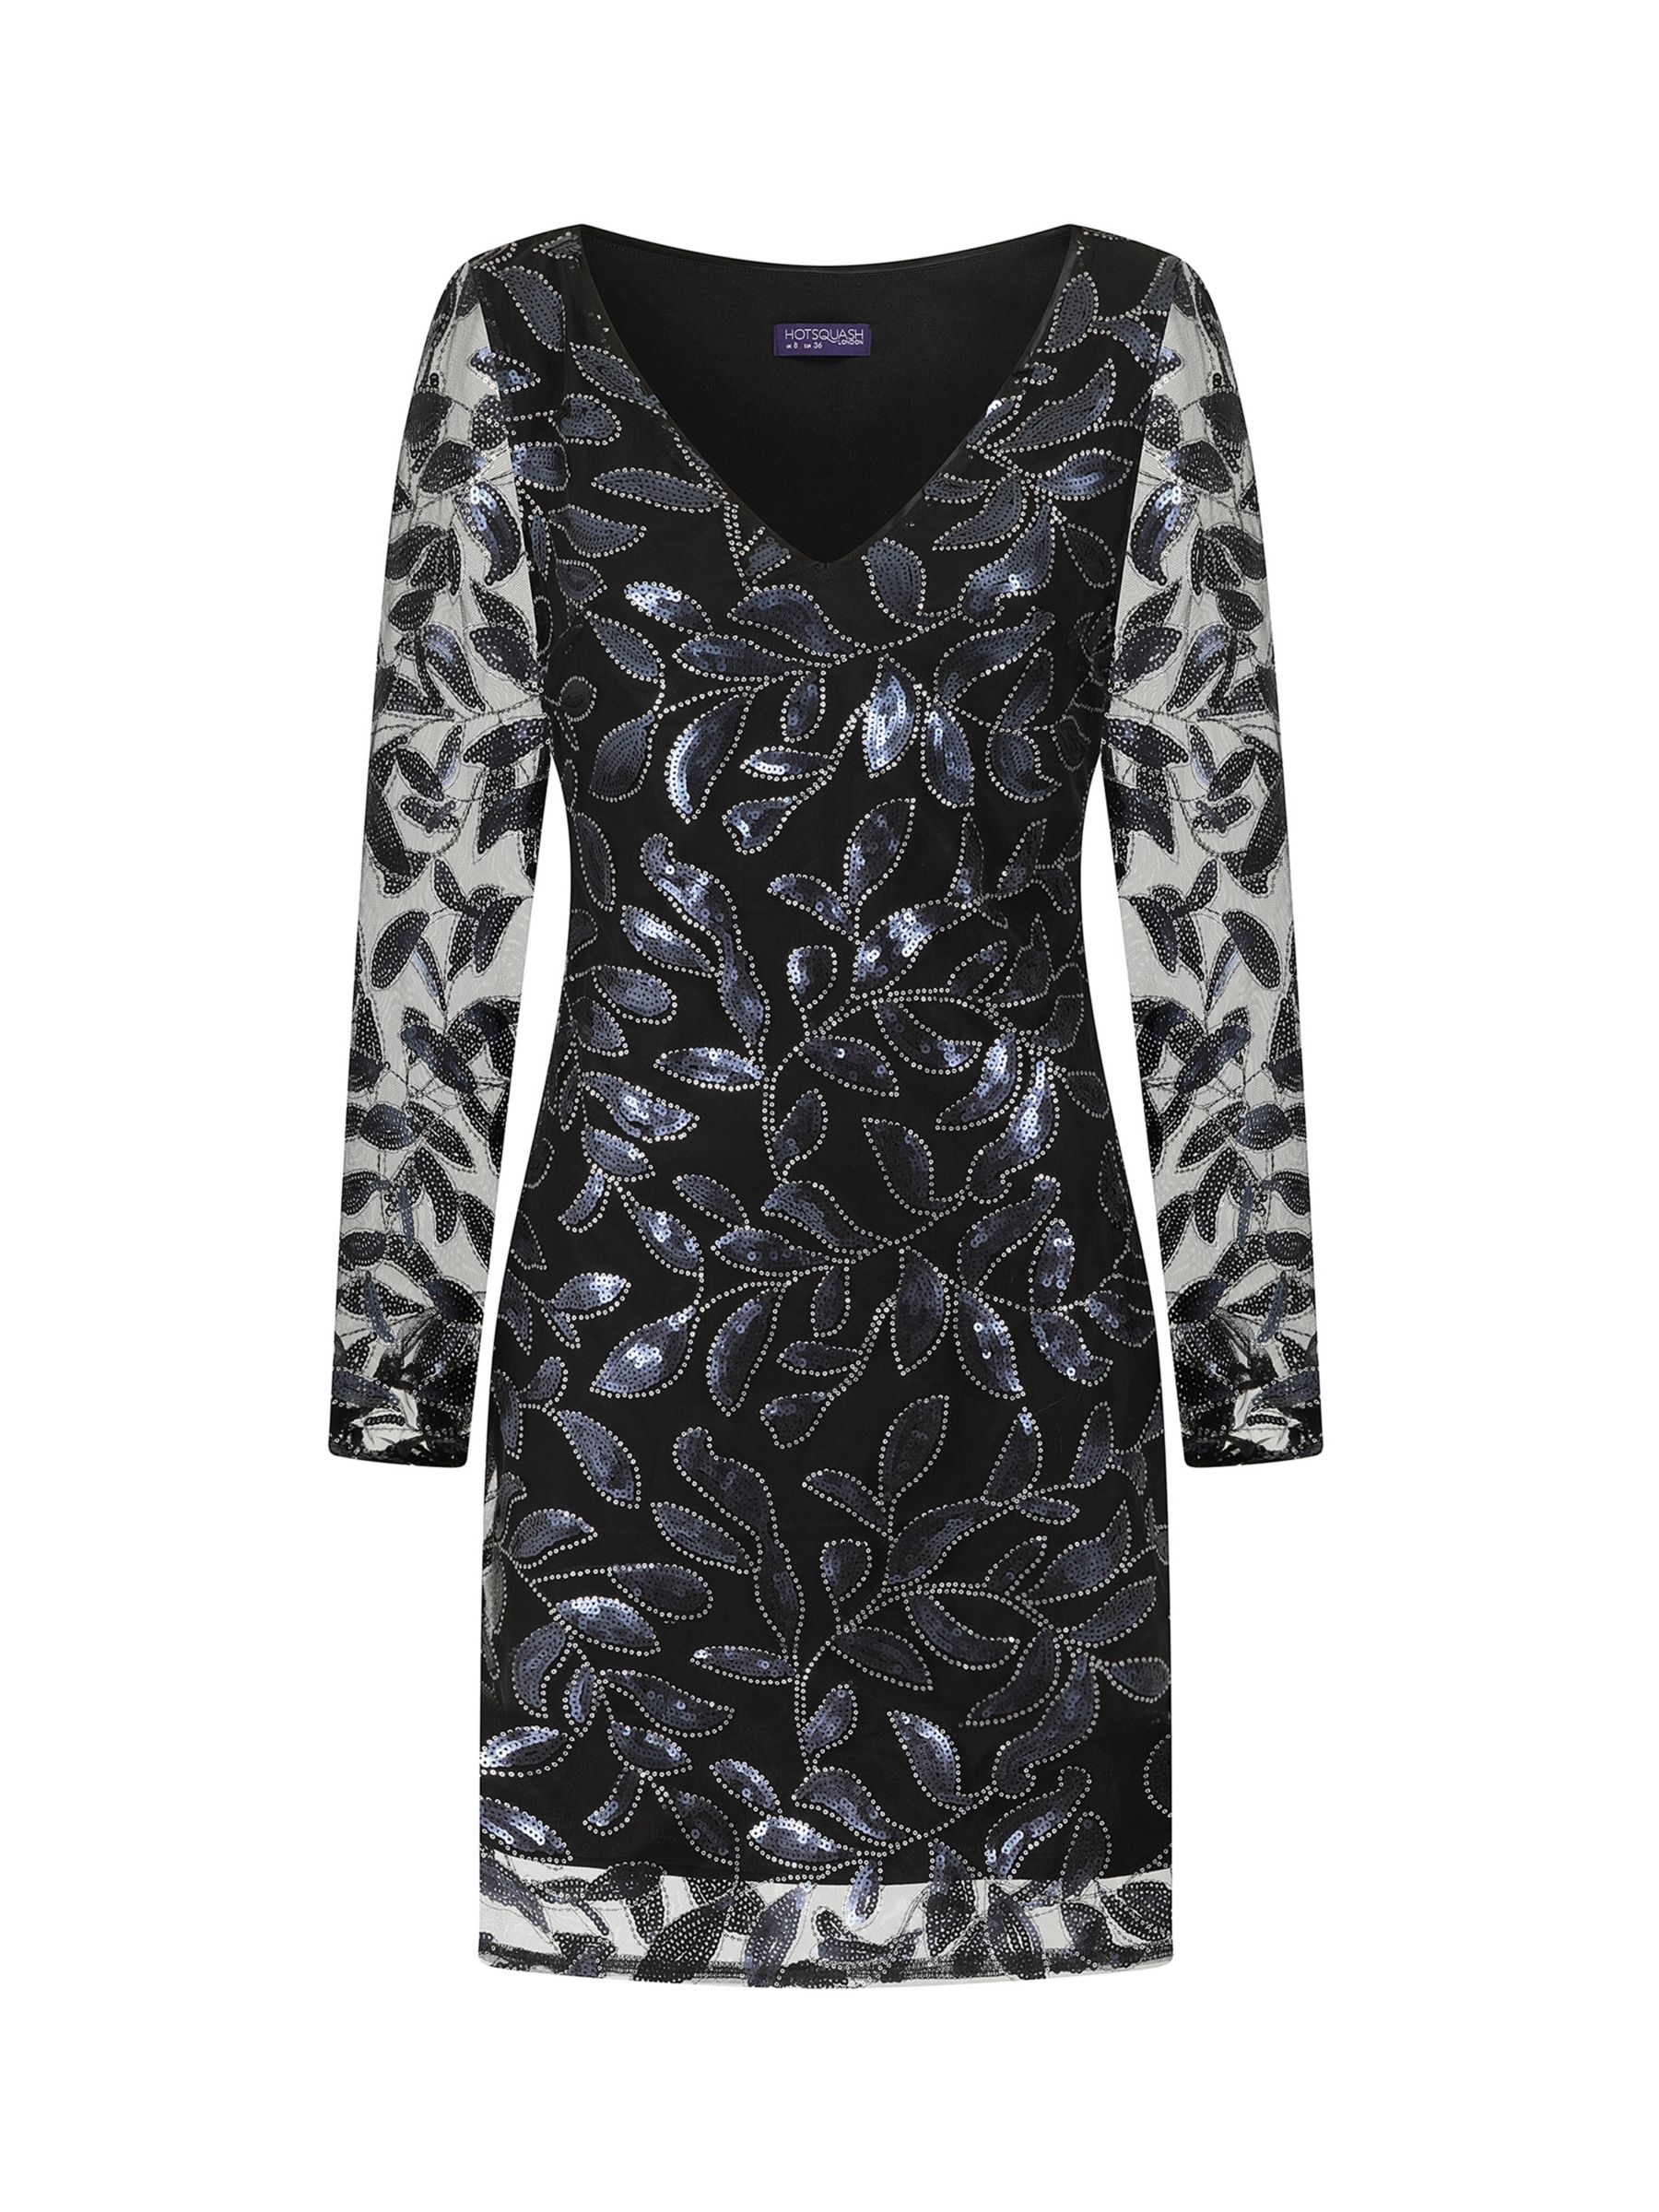 Buy HotSquash Sequin Leaf Embroidery Shift Dress, Black Online at johnlewis.com